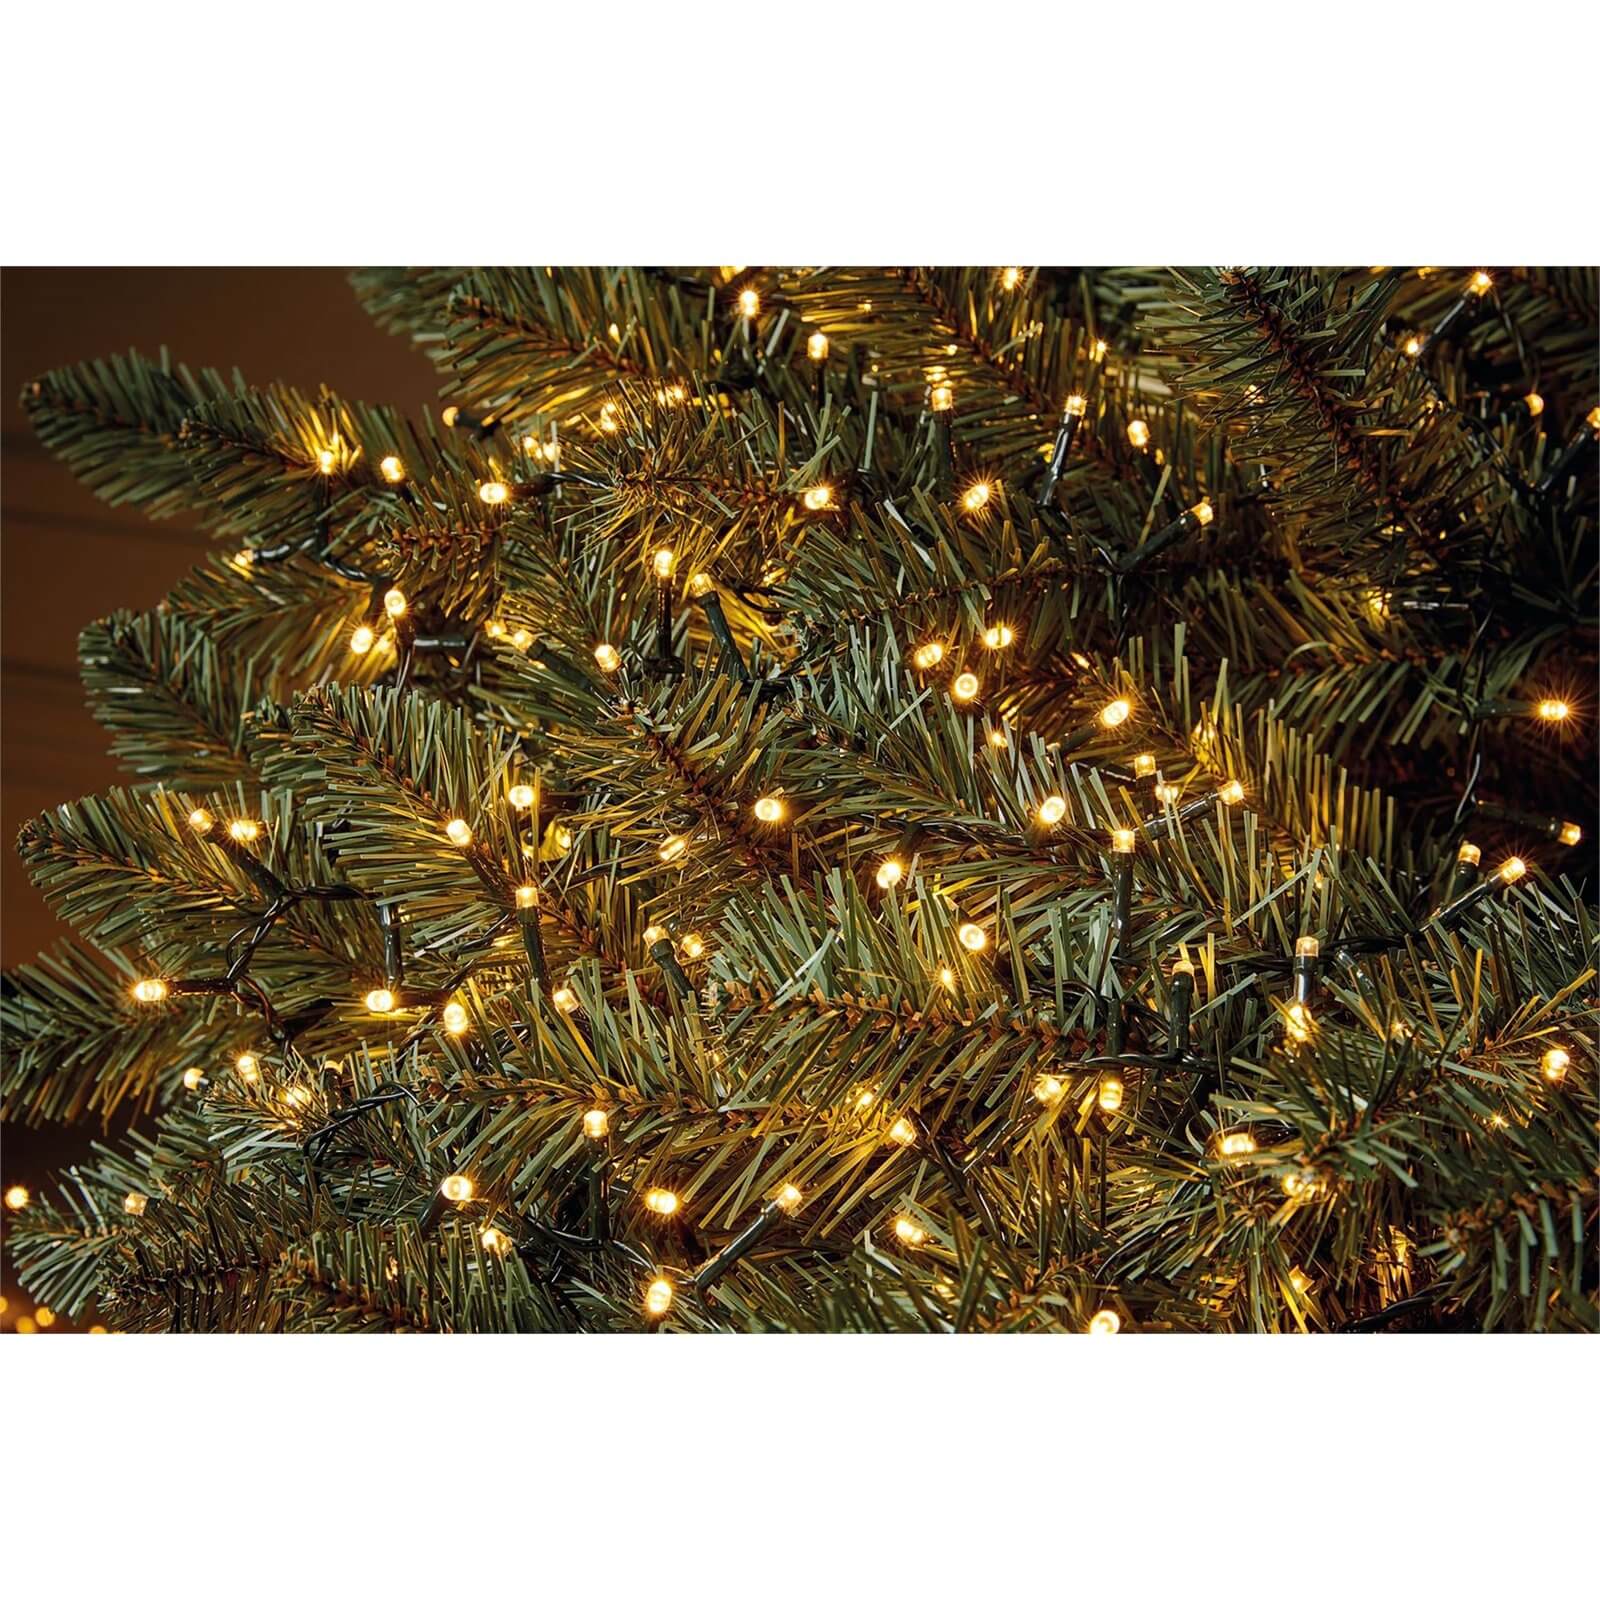 Photo of 600 Led String Christmas Tree Lights - Warm White